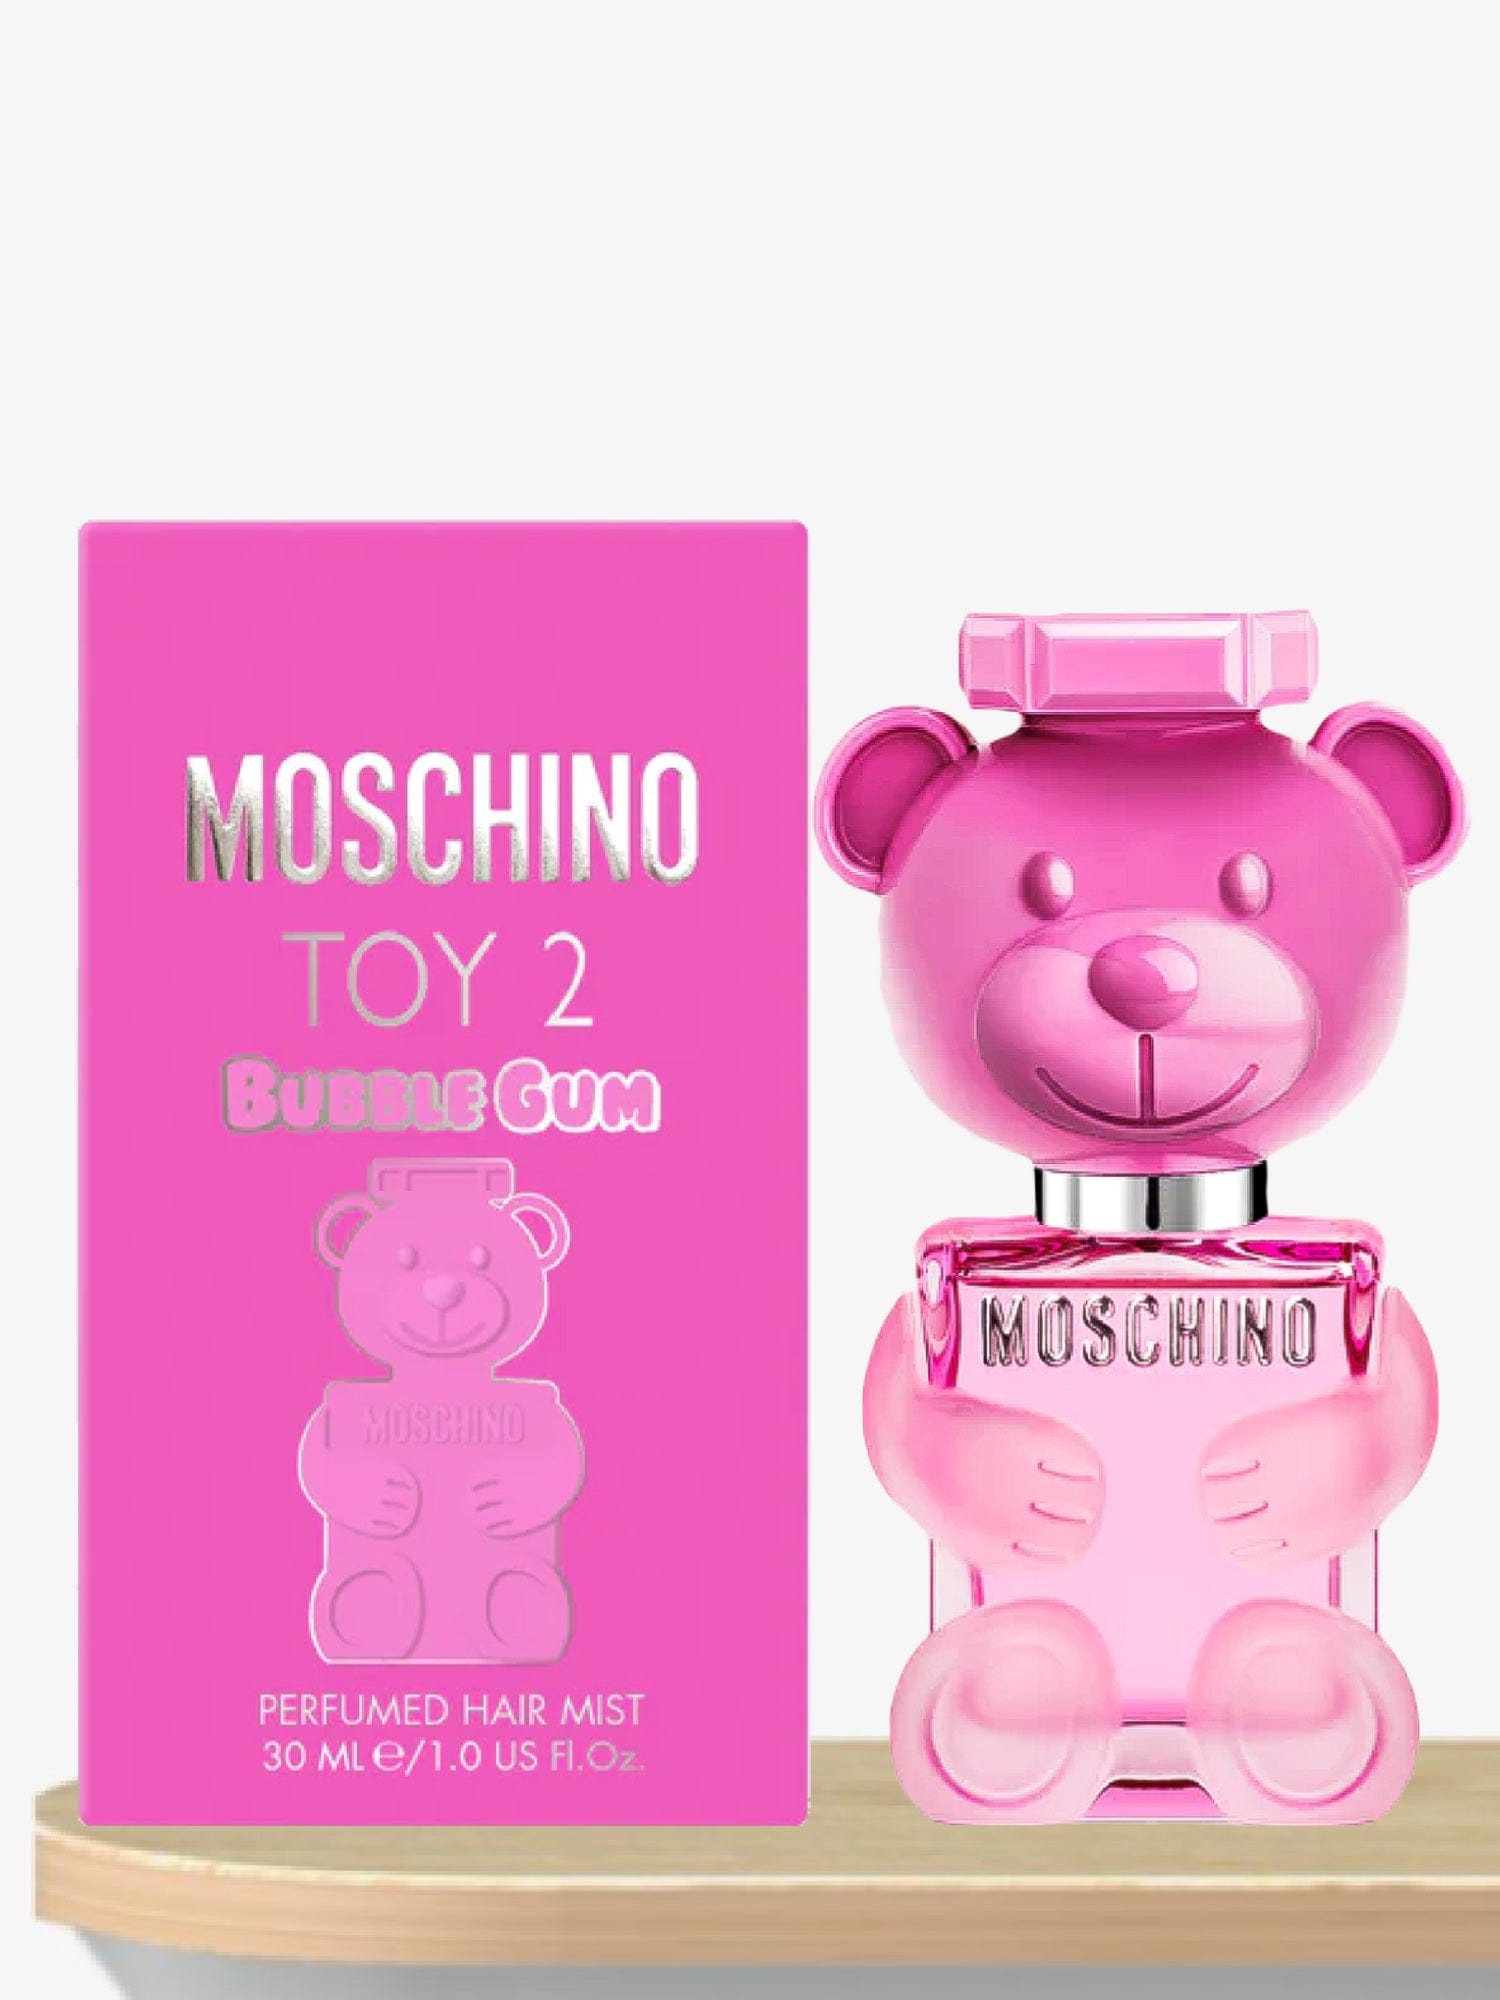 Moschino Toy 2 Bubble Gum Hair Mist 30 mL / Female